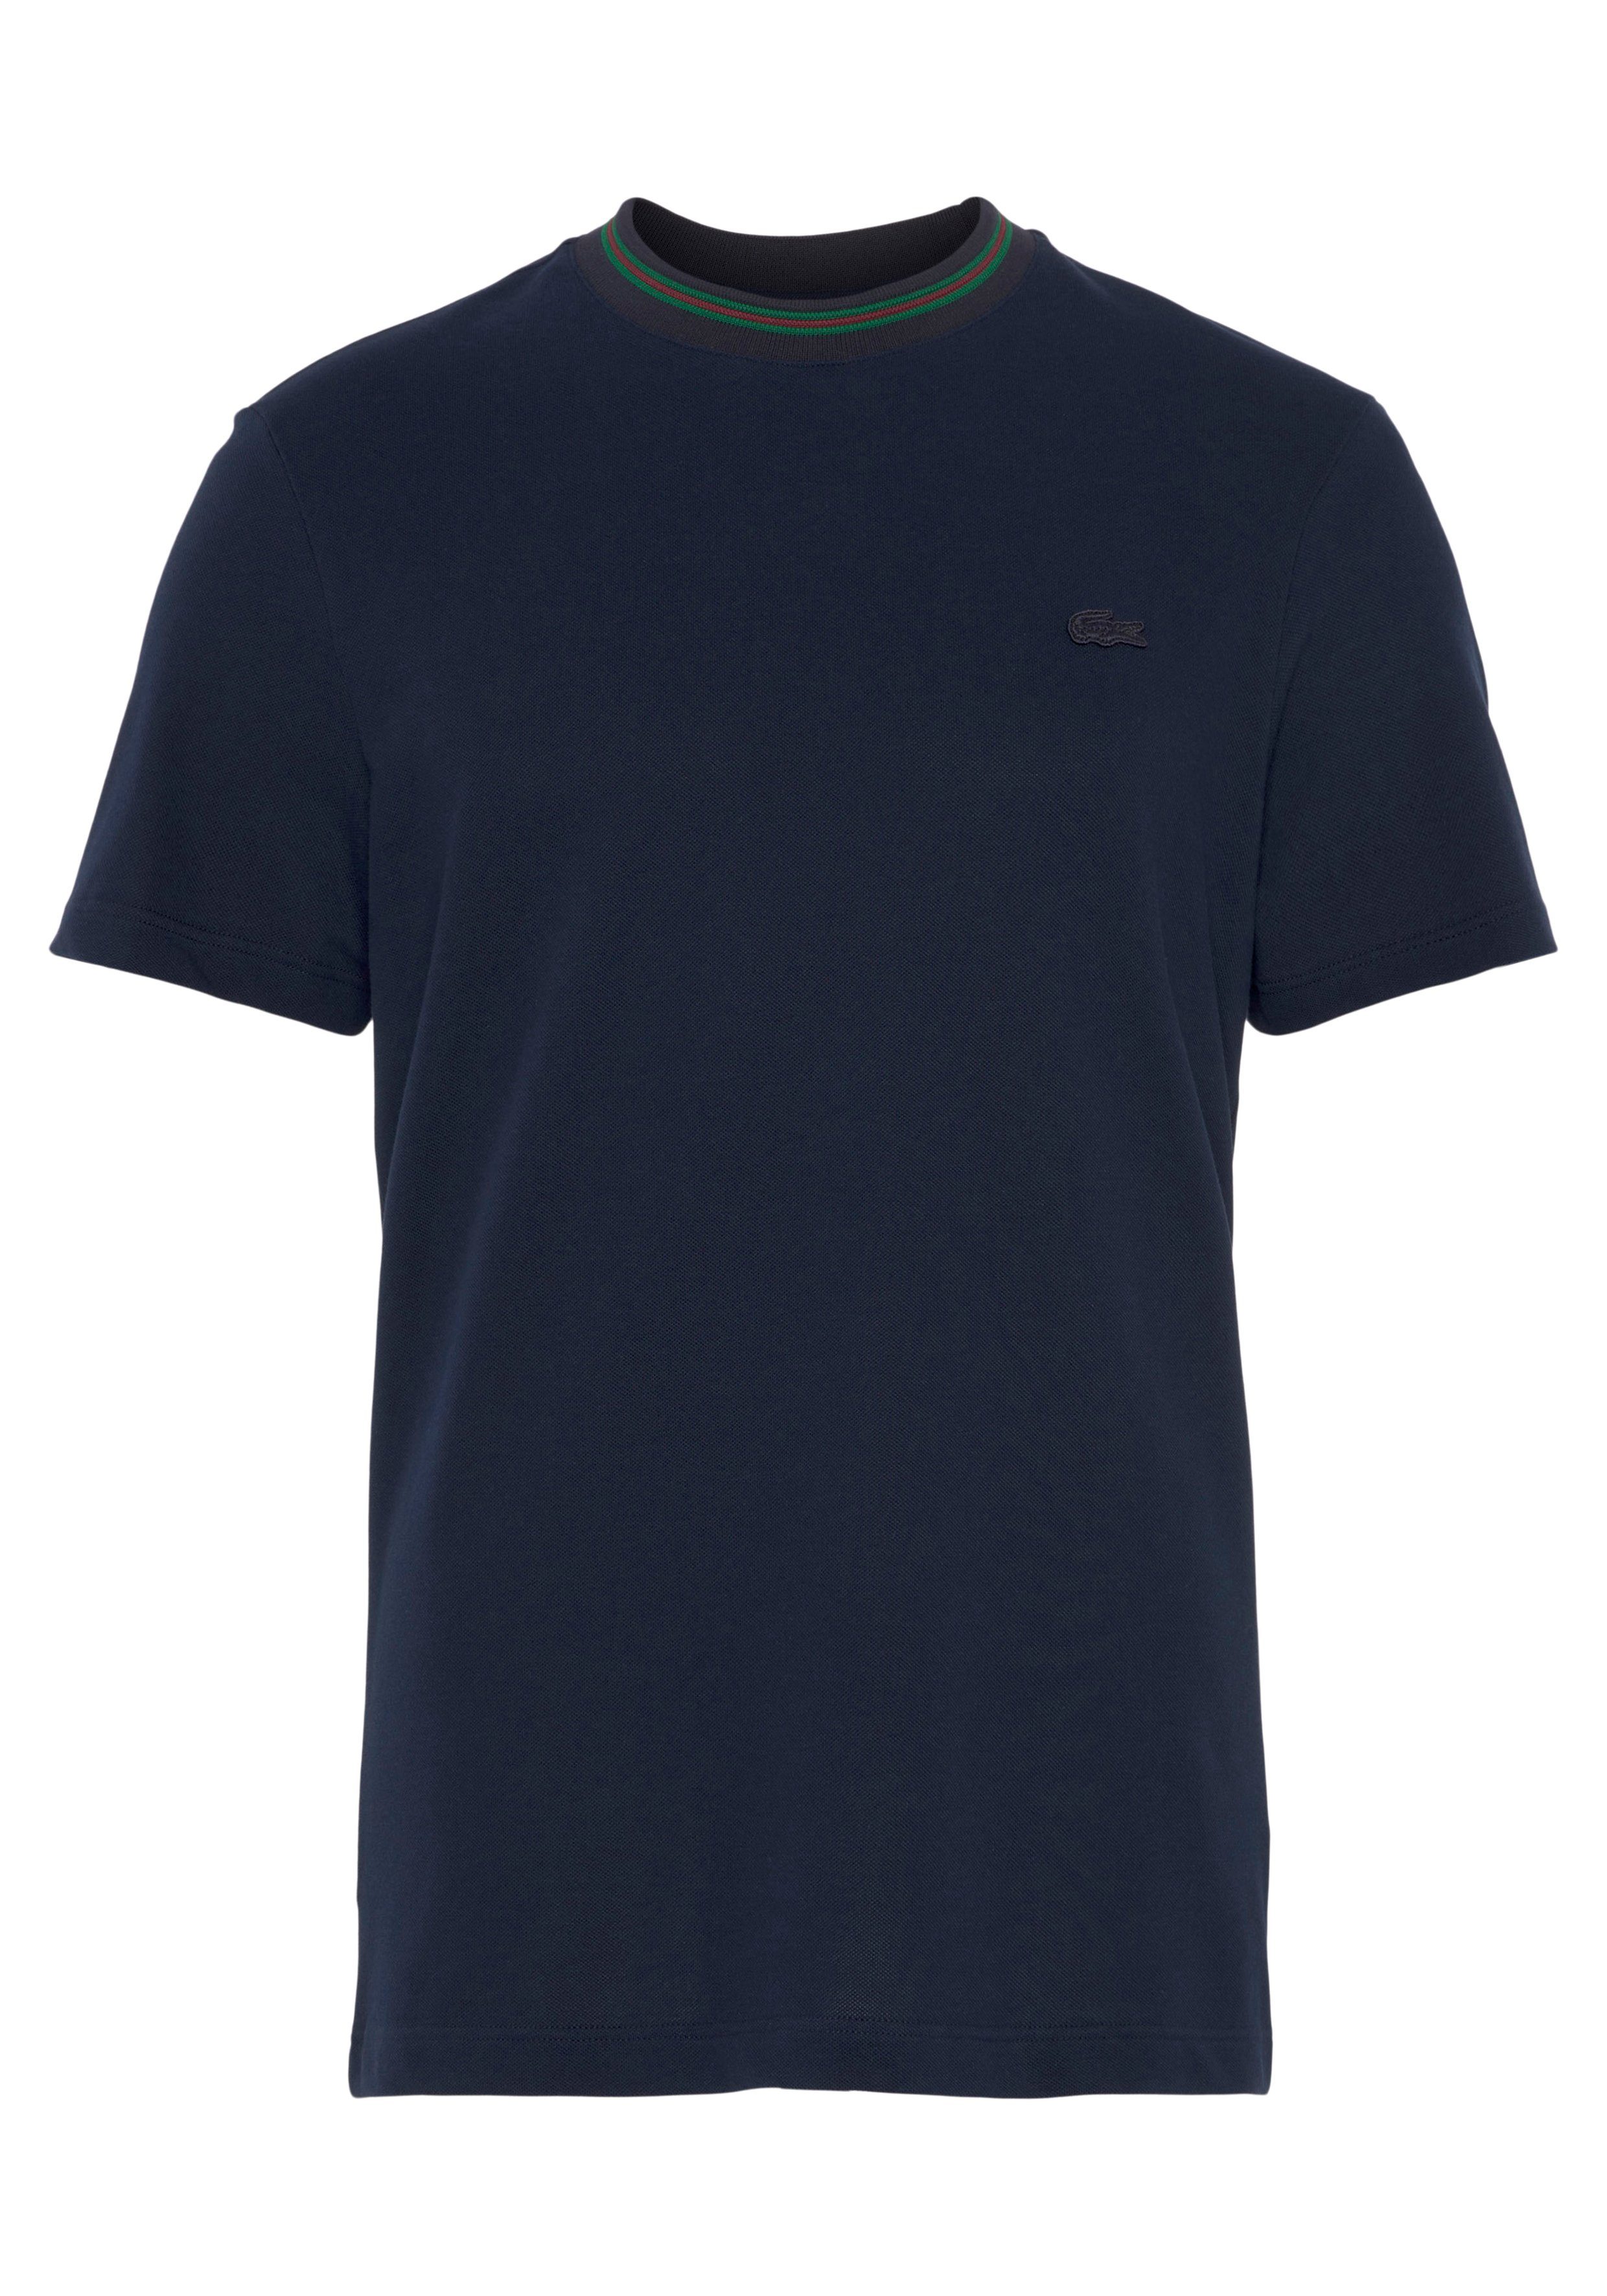 Details Ausschnitt Lacoste T-SHIRT am Mit kontrastfarbenen mit Rundhalsausschnitt, T-Shirt